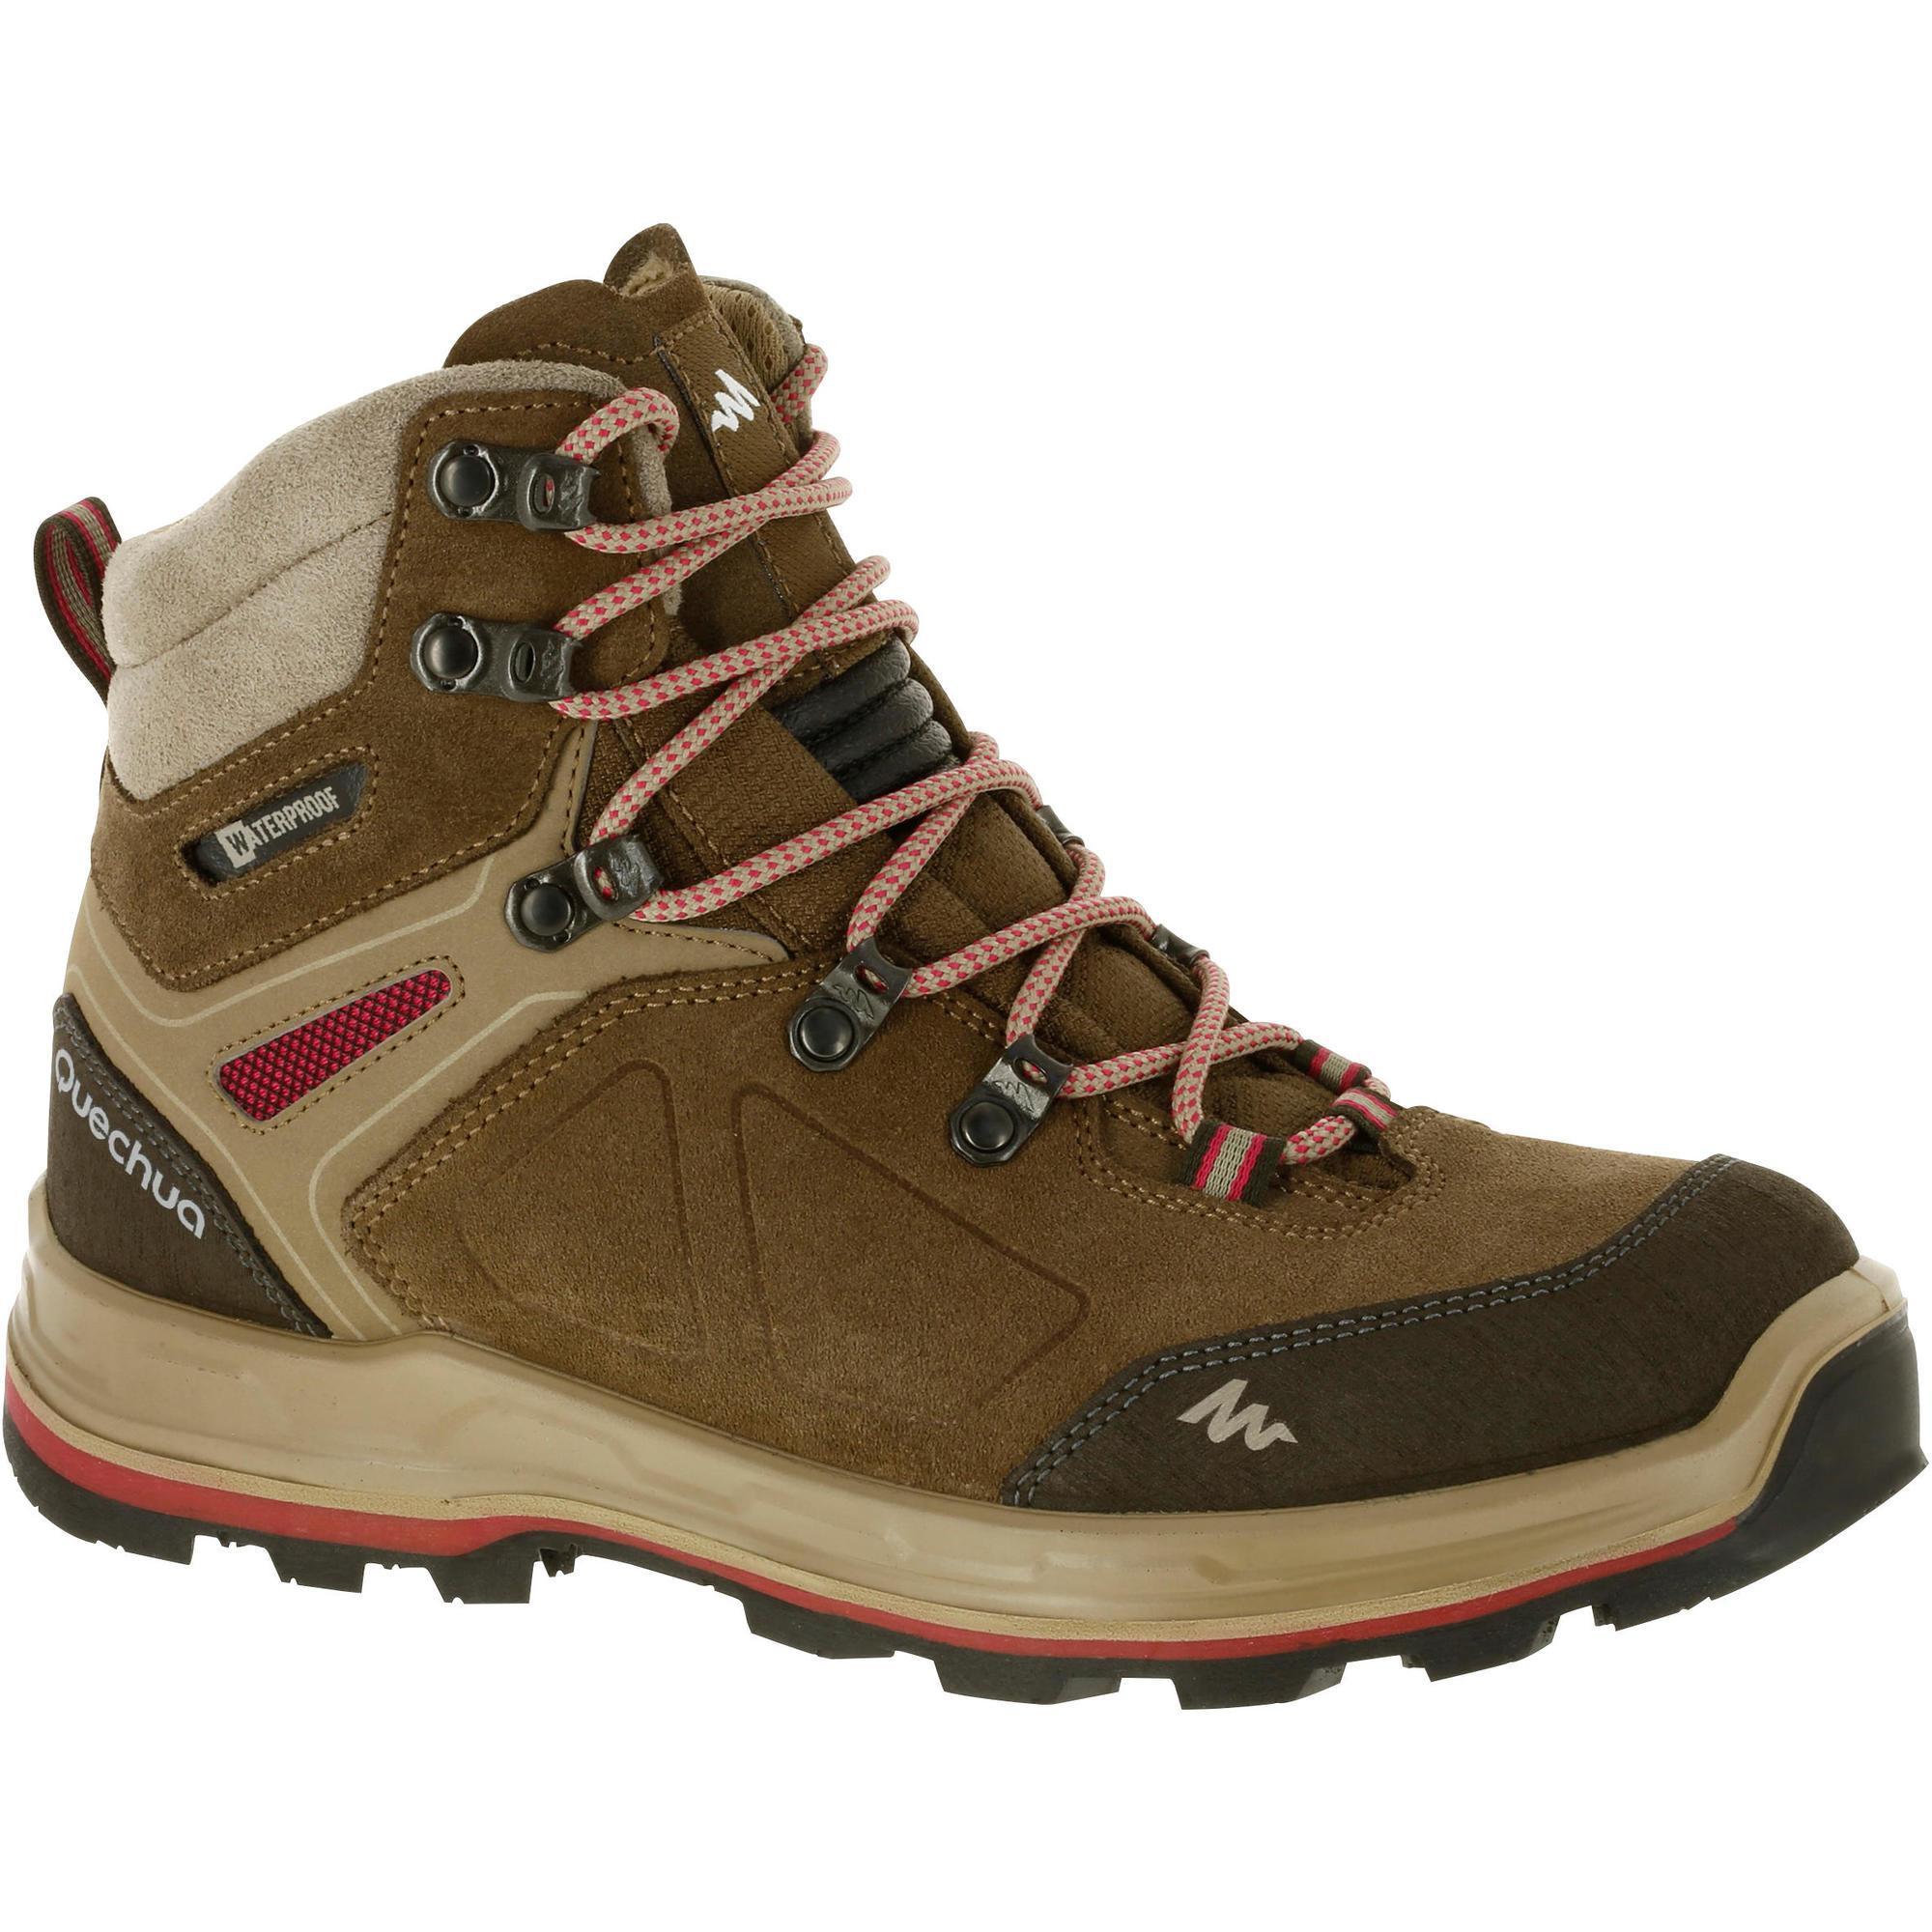 Hiking Boots, Waterproof Walking Boots